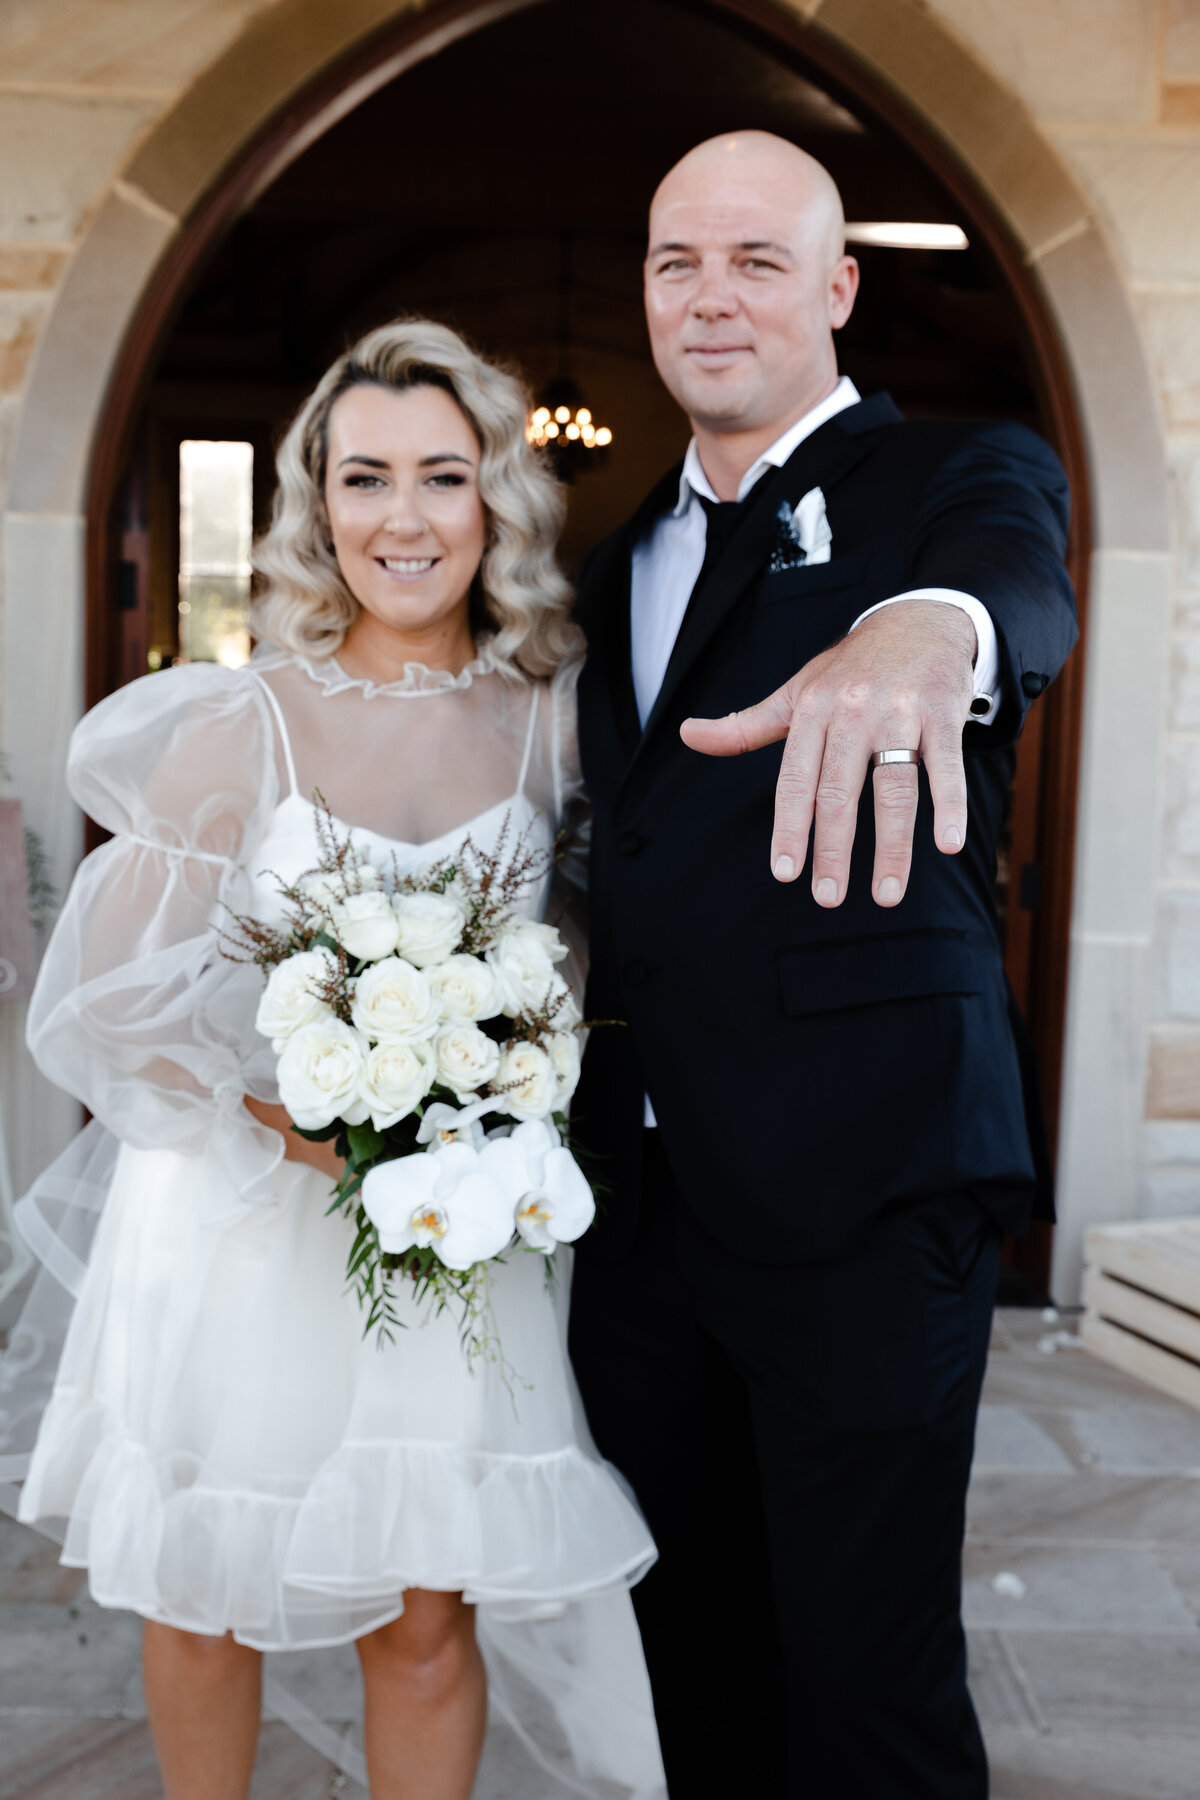 Katie & Trent Wedding - Peterson House Pokolbin - Roam Ahead Media 2022 - Wedding videography and photography-604